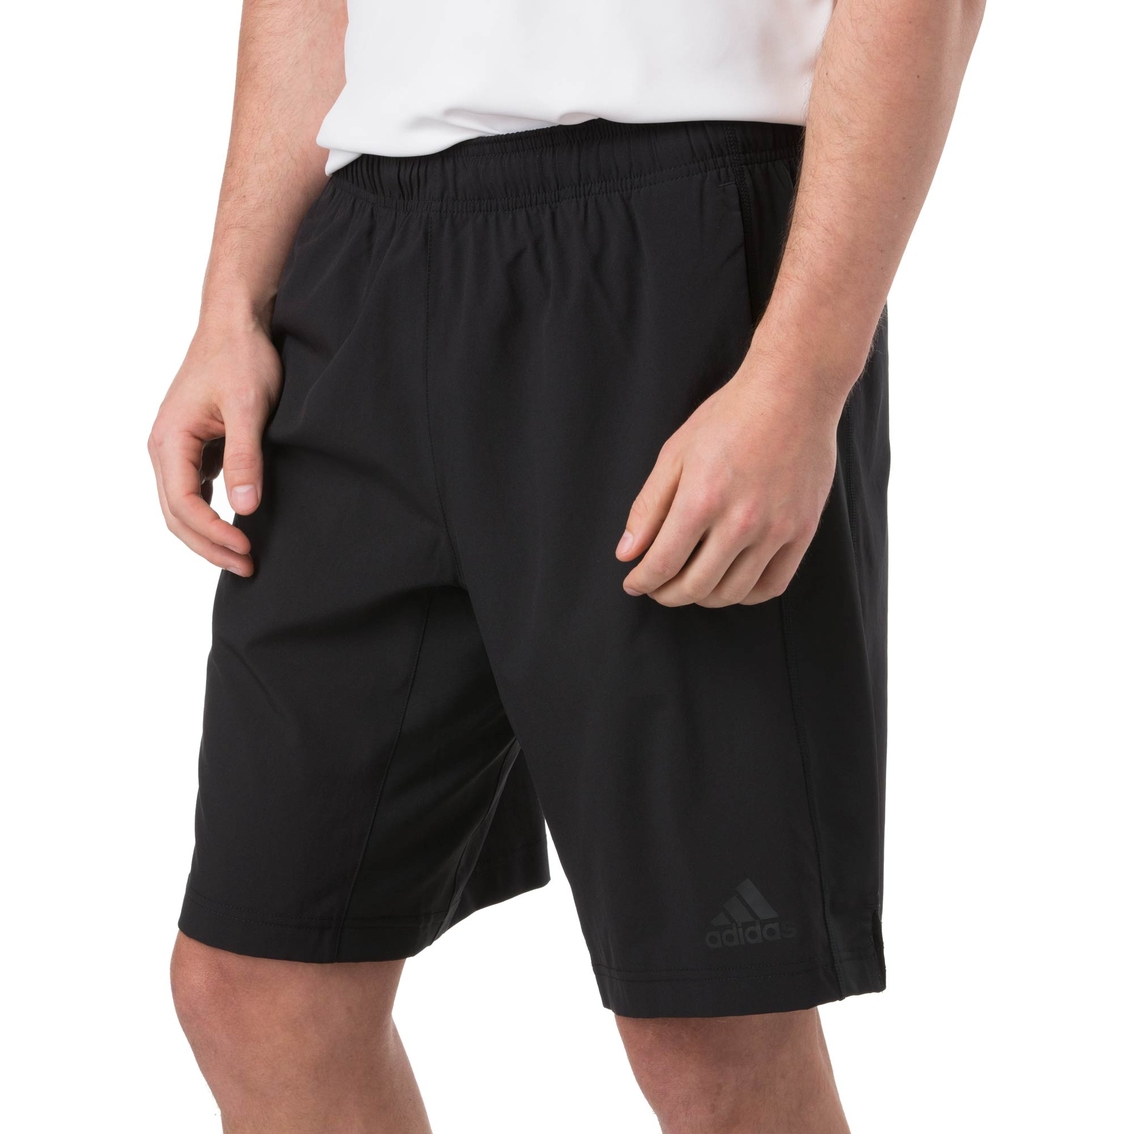 adidas team issue shorts